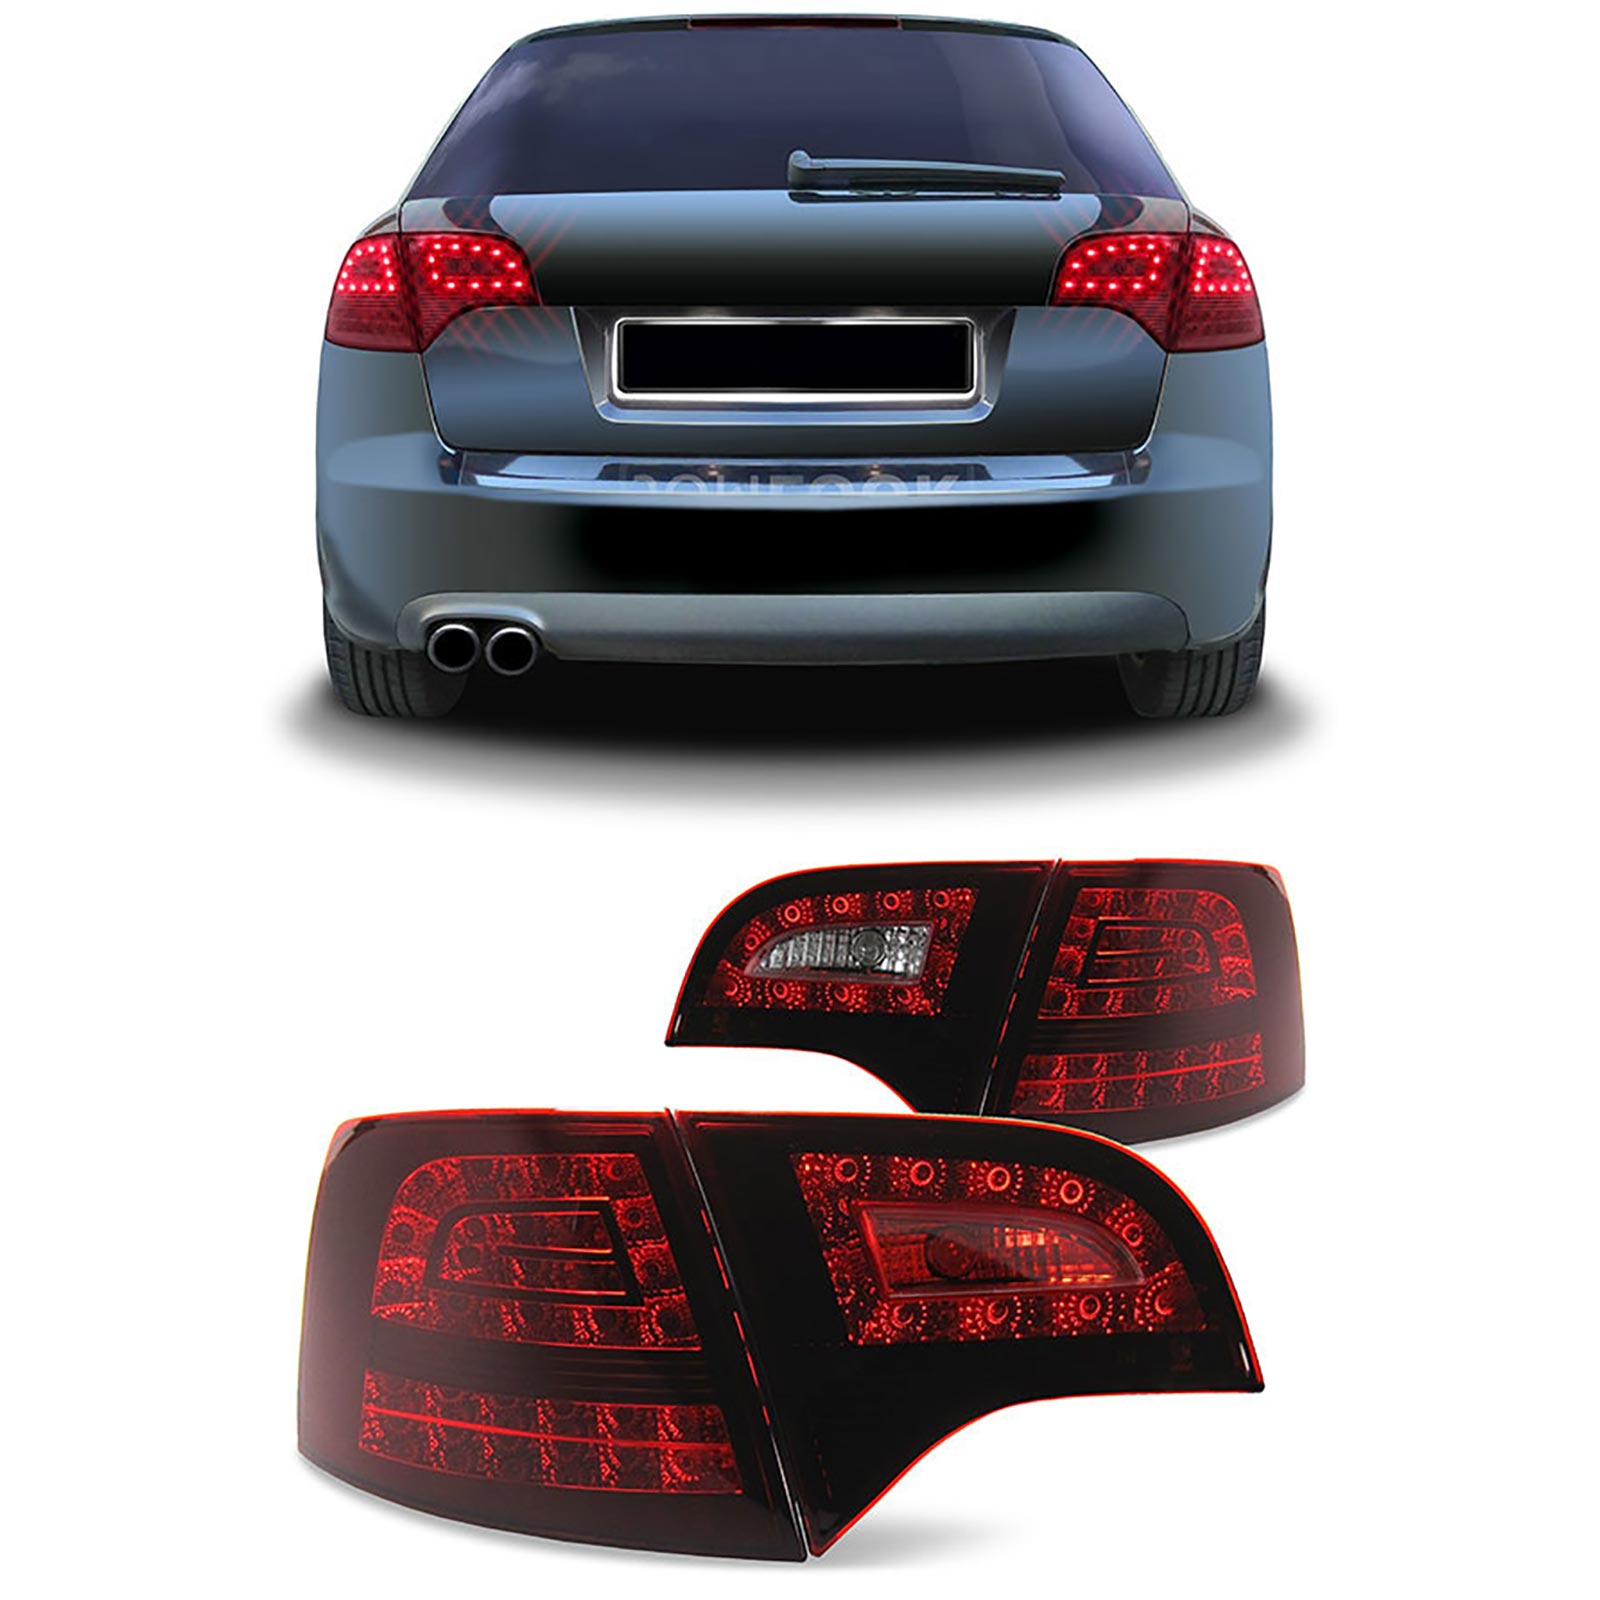 LED Rückleuchten + LED Blinker dunkel rot für Audi A4 Avant Kombi B7 04-08  kaufen